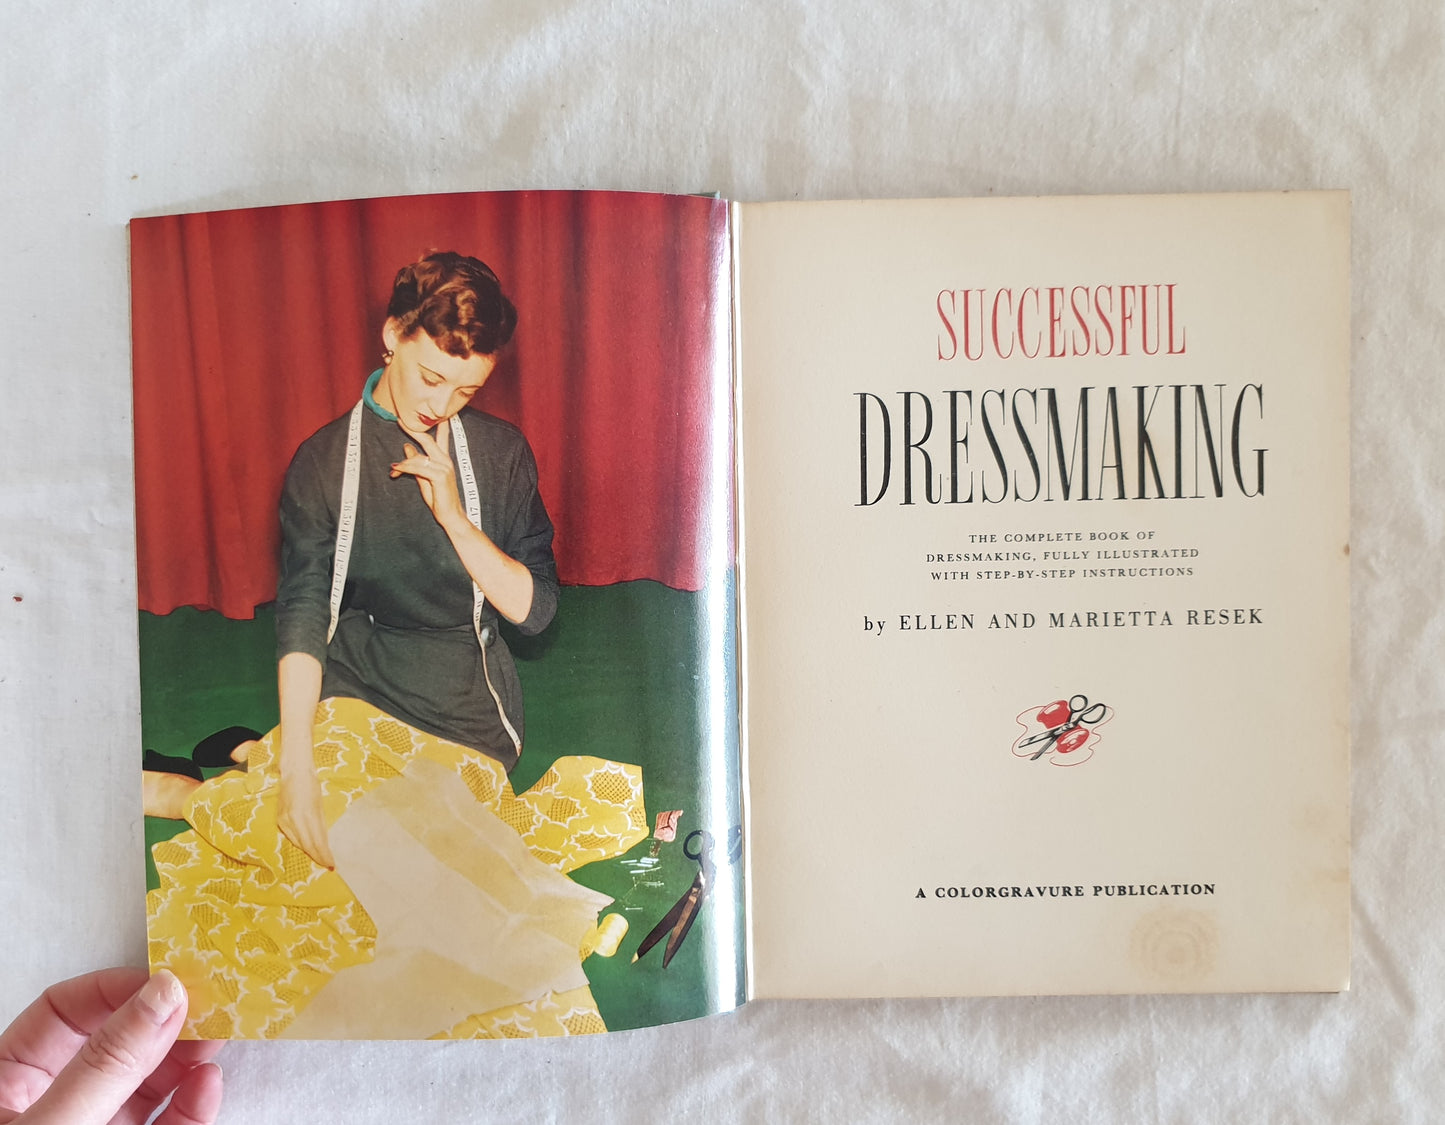 Successful Dressmaking by Ellen and Marietta Resek